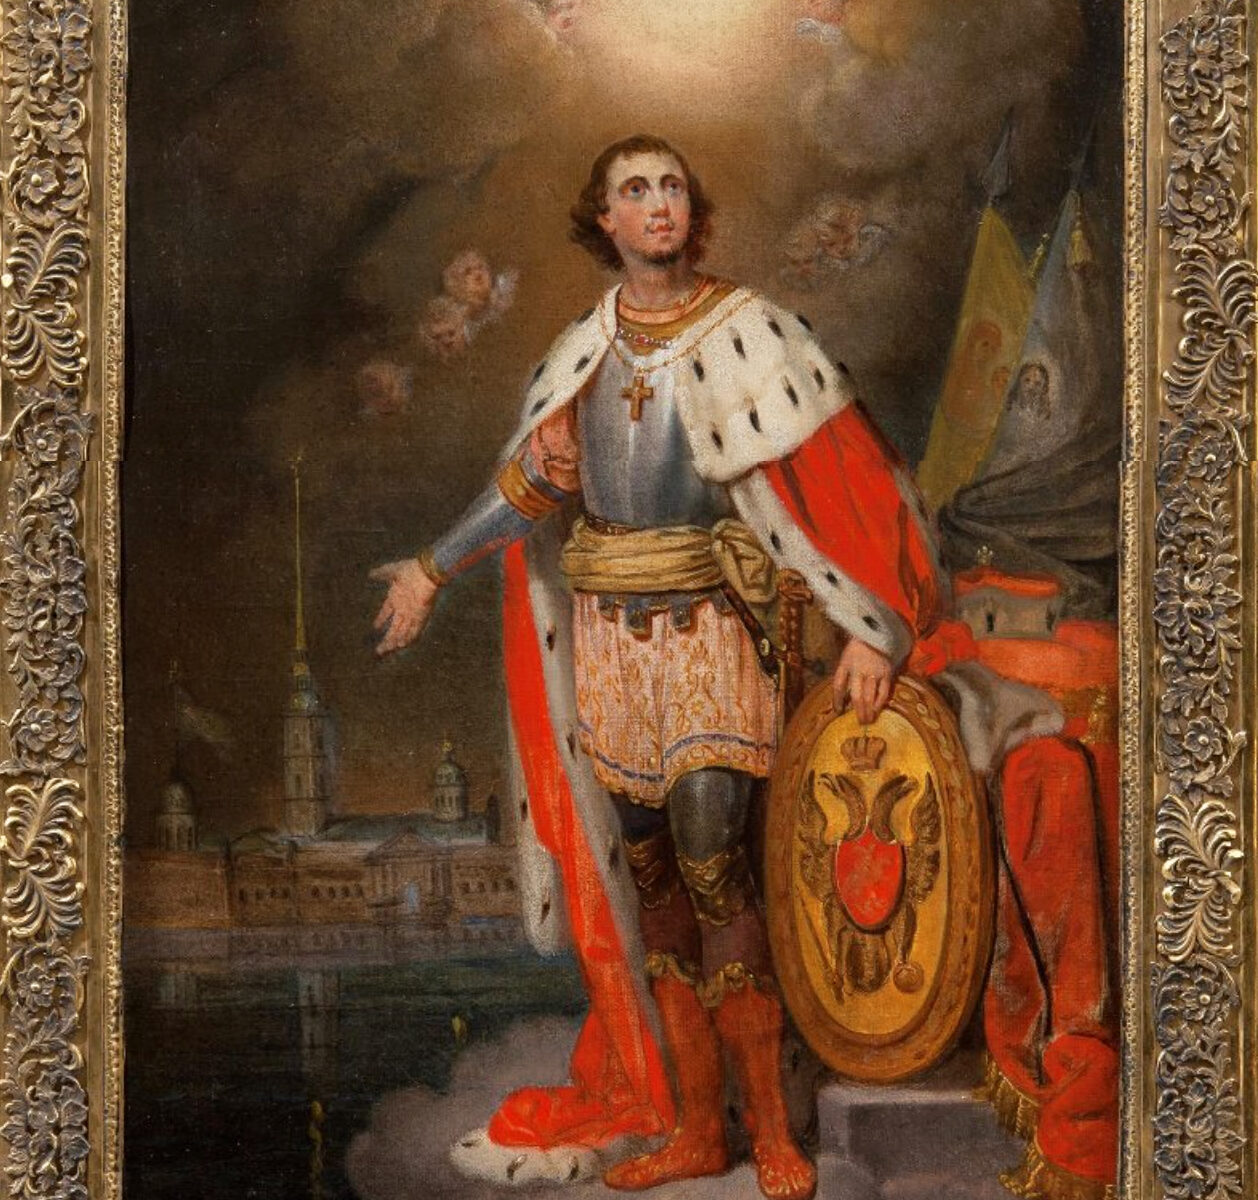 Икона «Благоверный князь Александр Невский» Холст, грунт, масло Начало 1840-х гг.